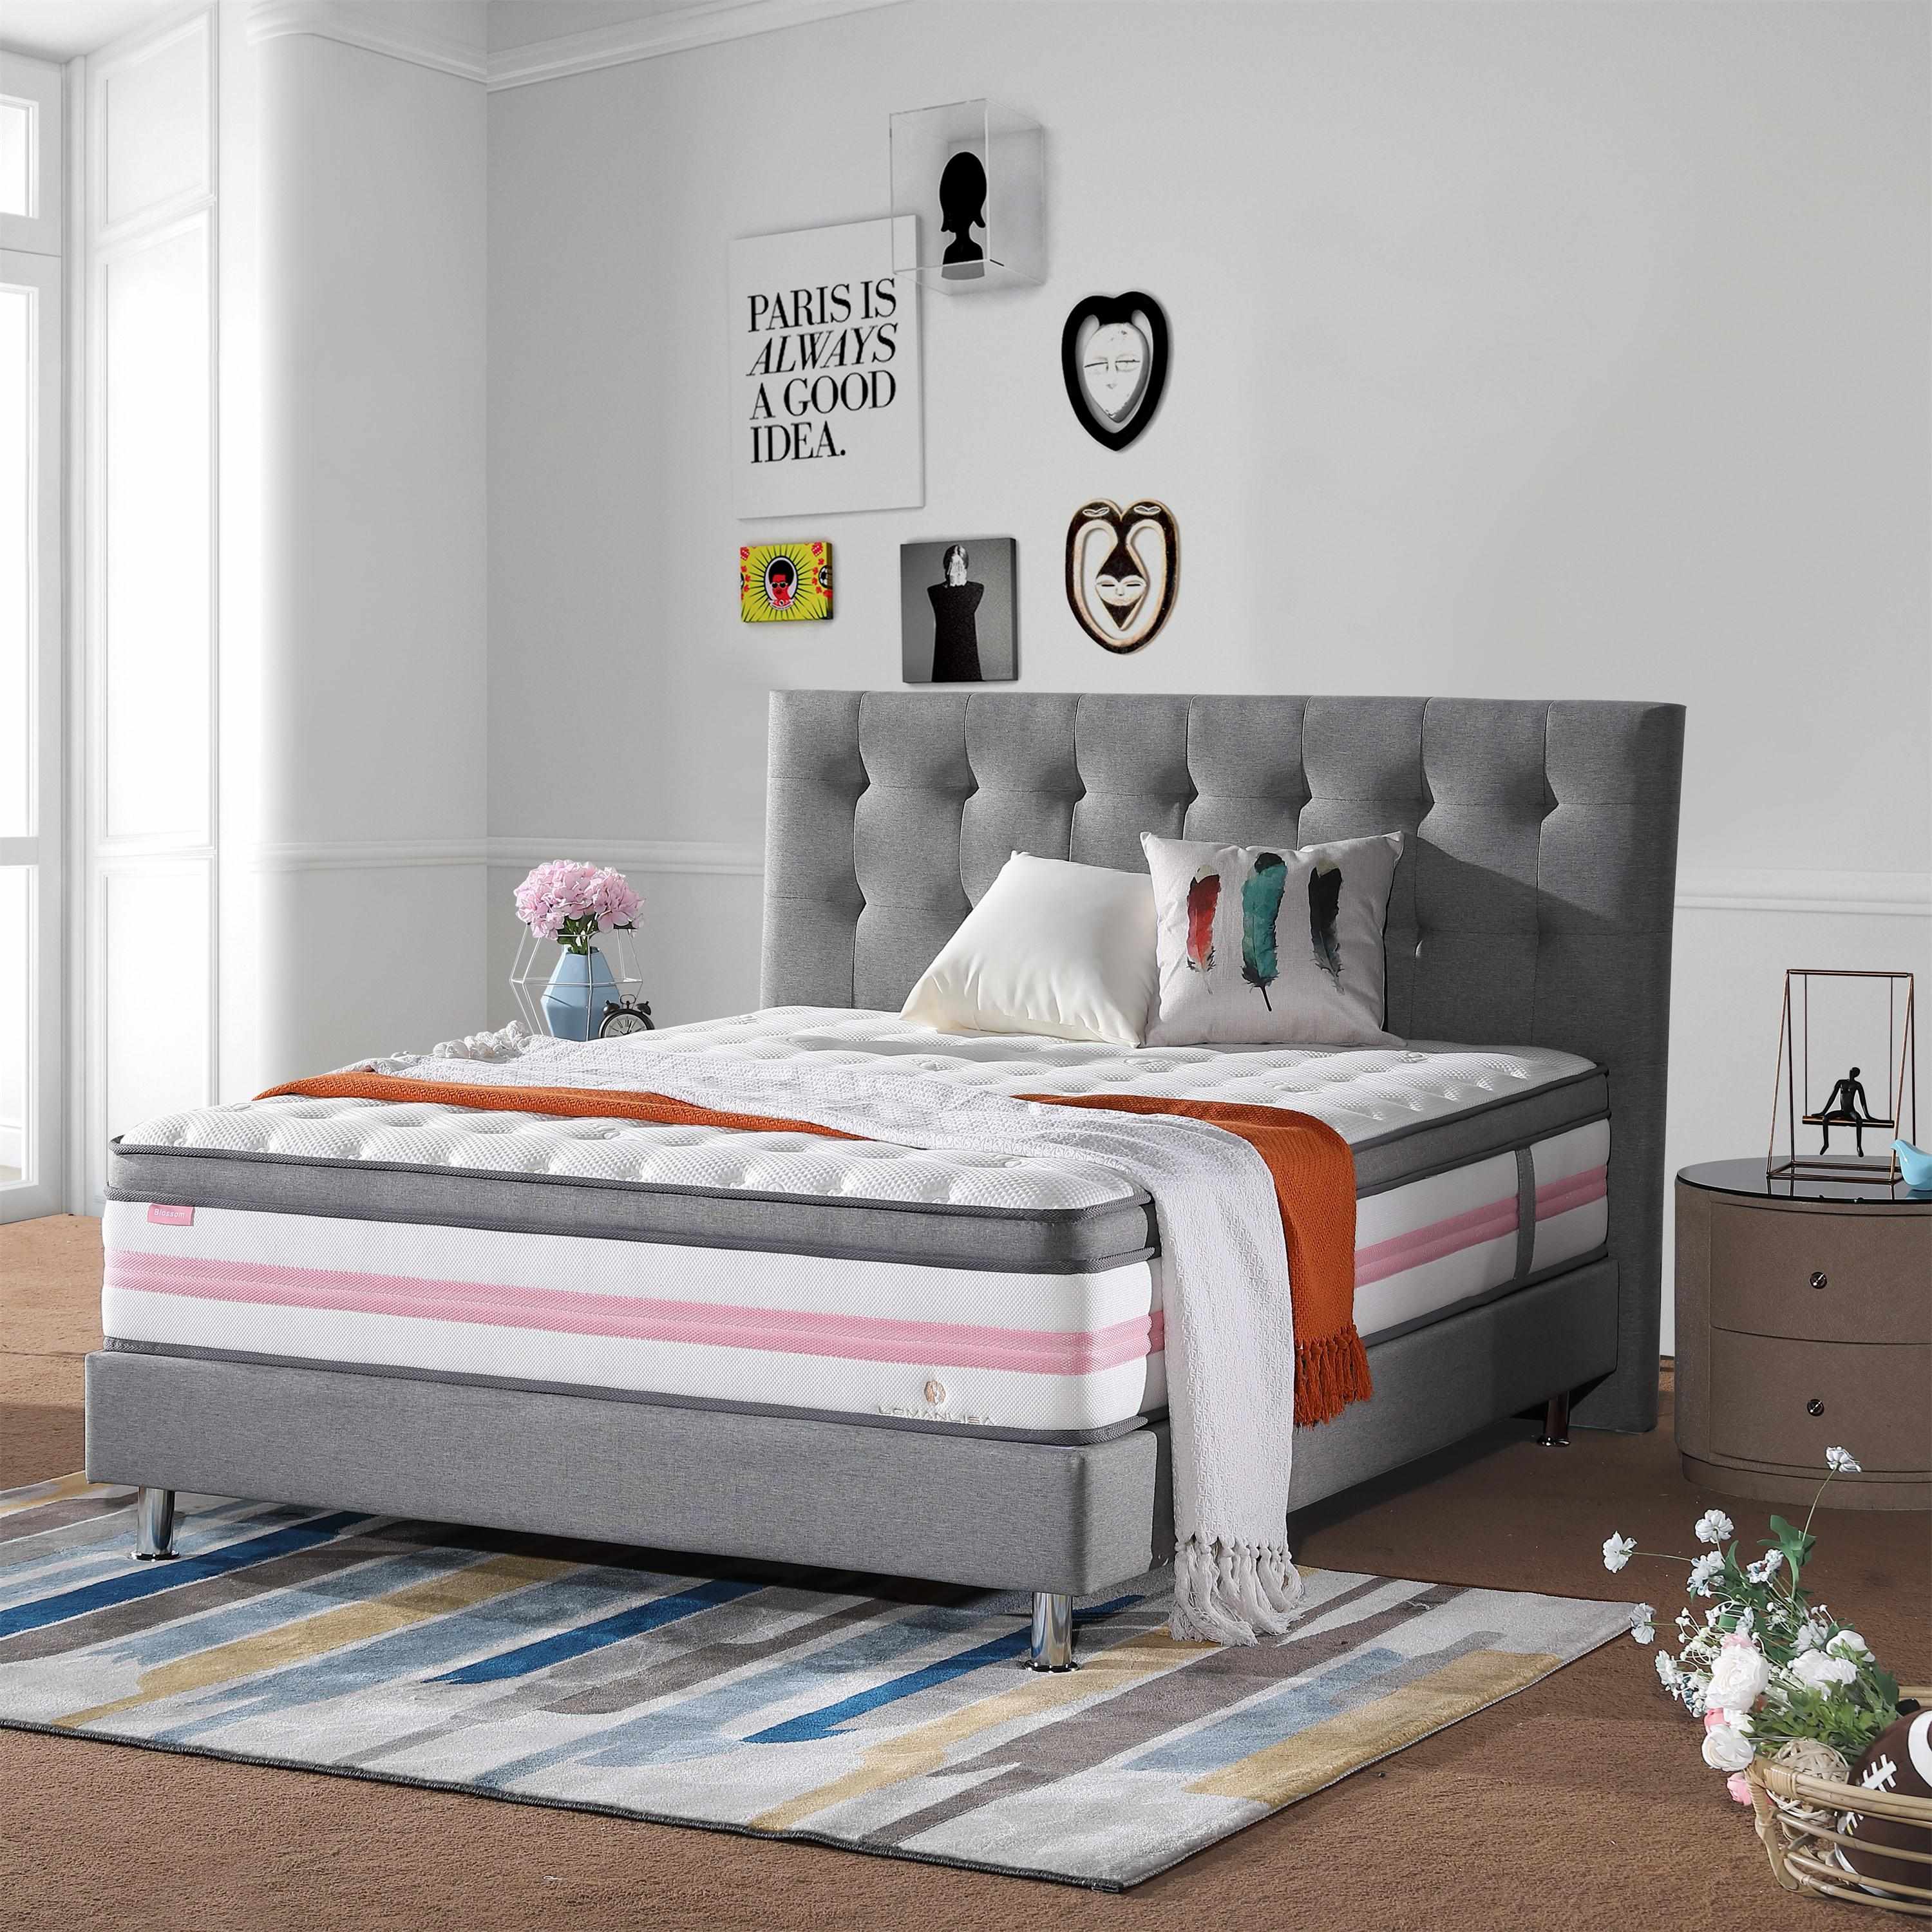 JLH popular roll up mattress type for bedroom